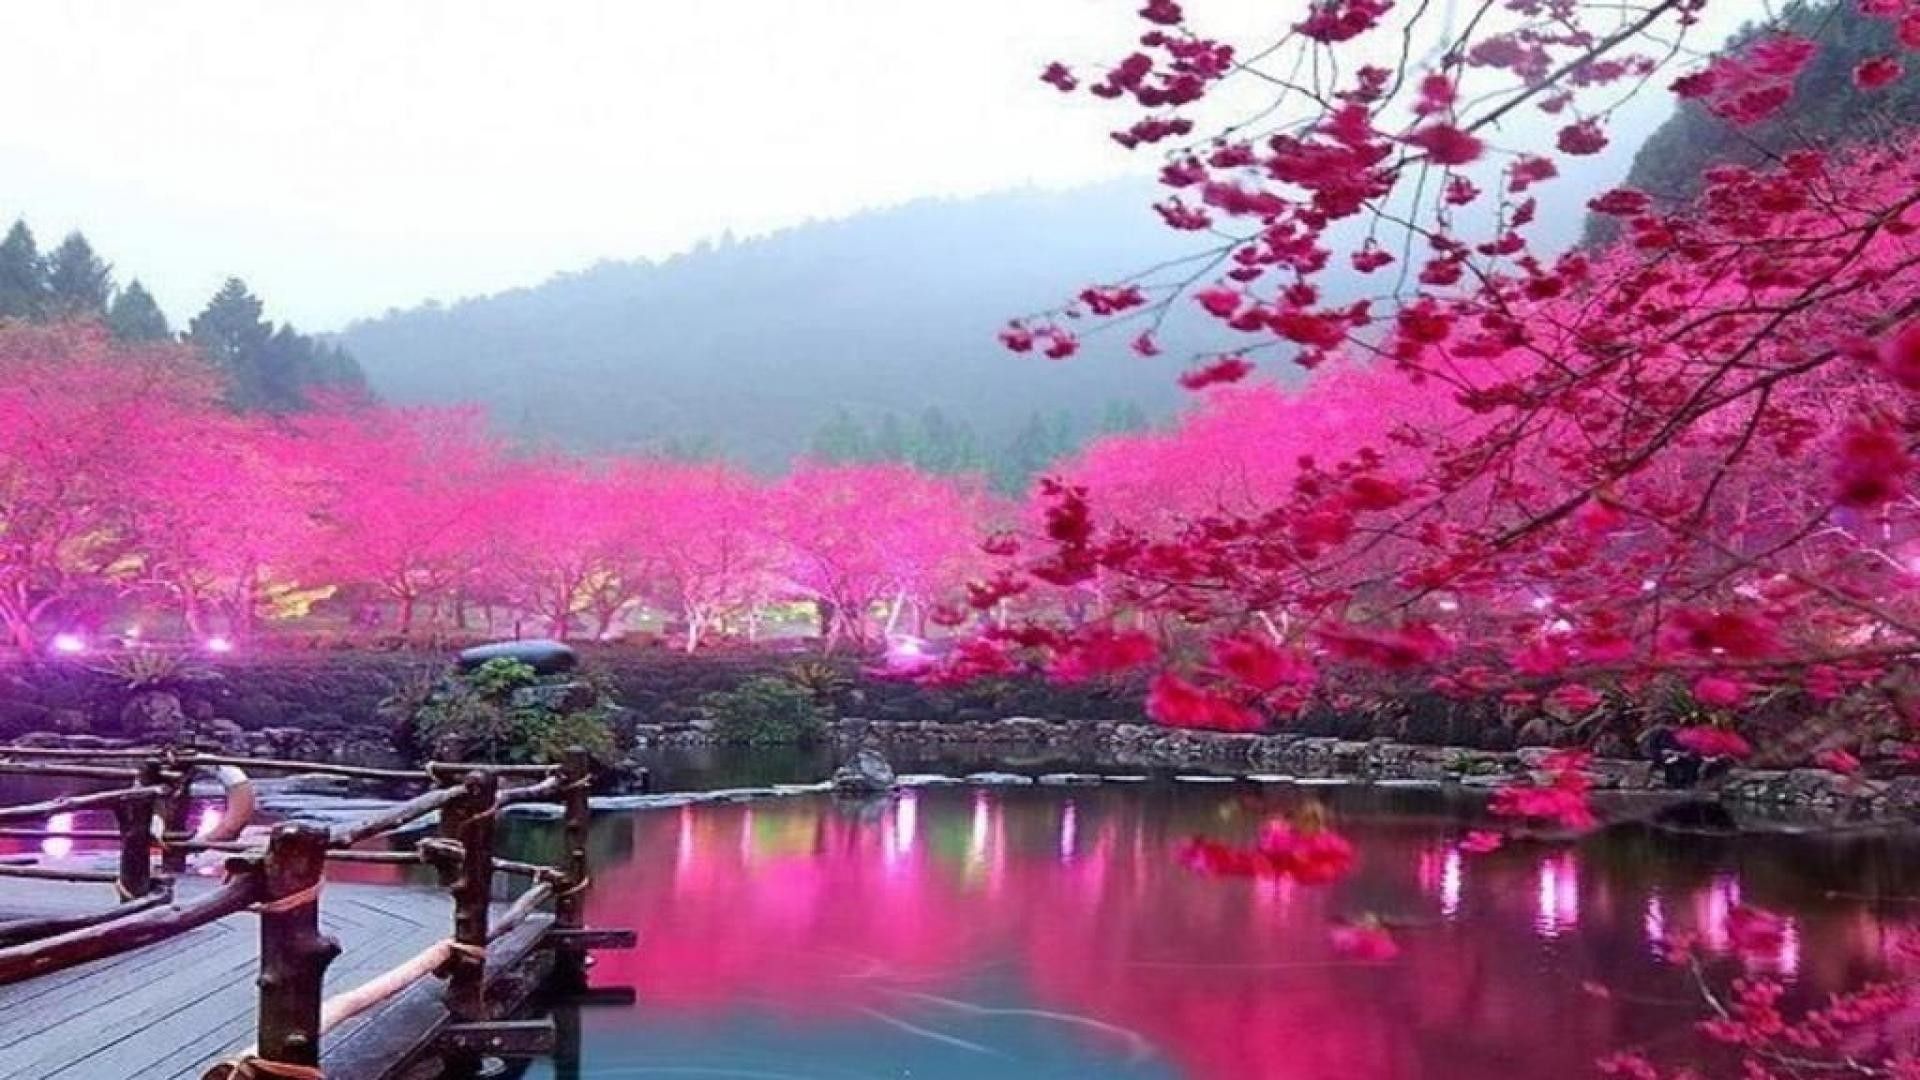 Cherry Blossom HD